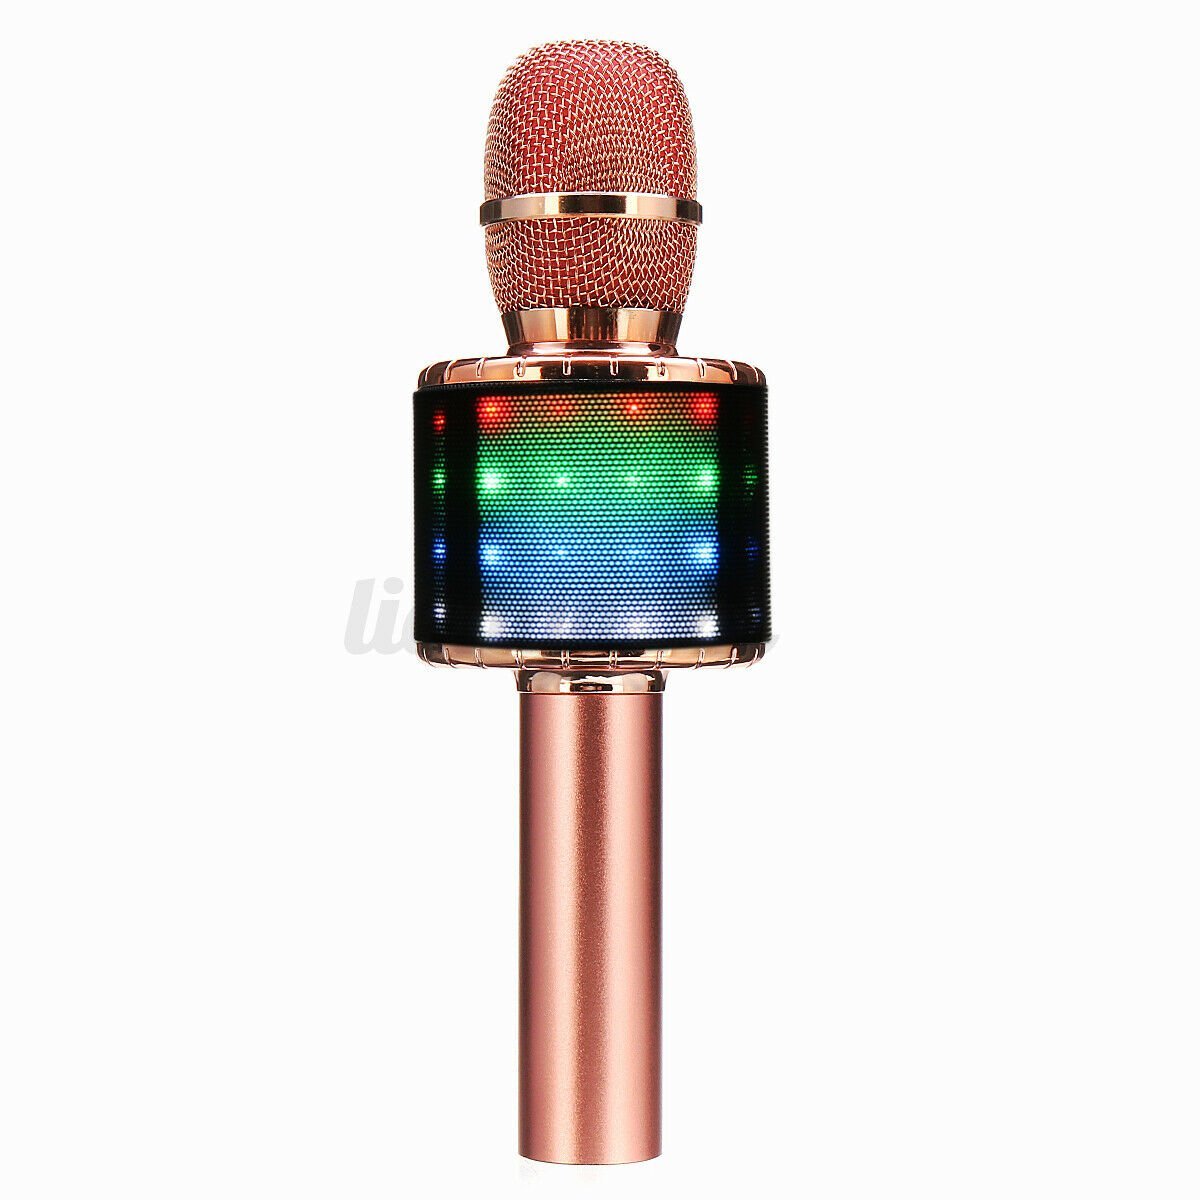 Karaoke Microphone with Speaker - Wireless Bluetooth Music Player Mic